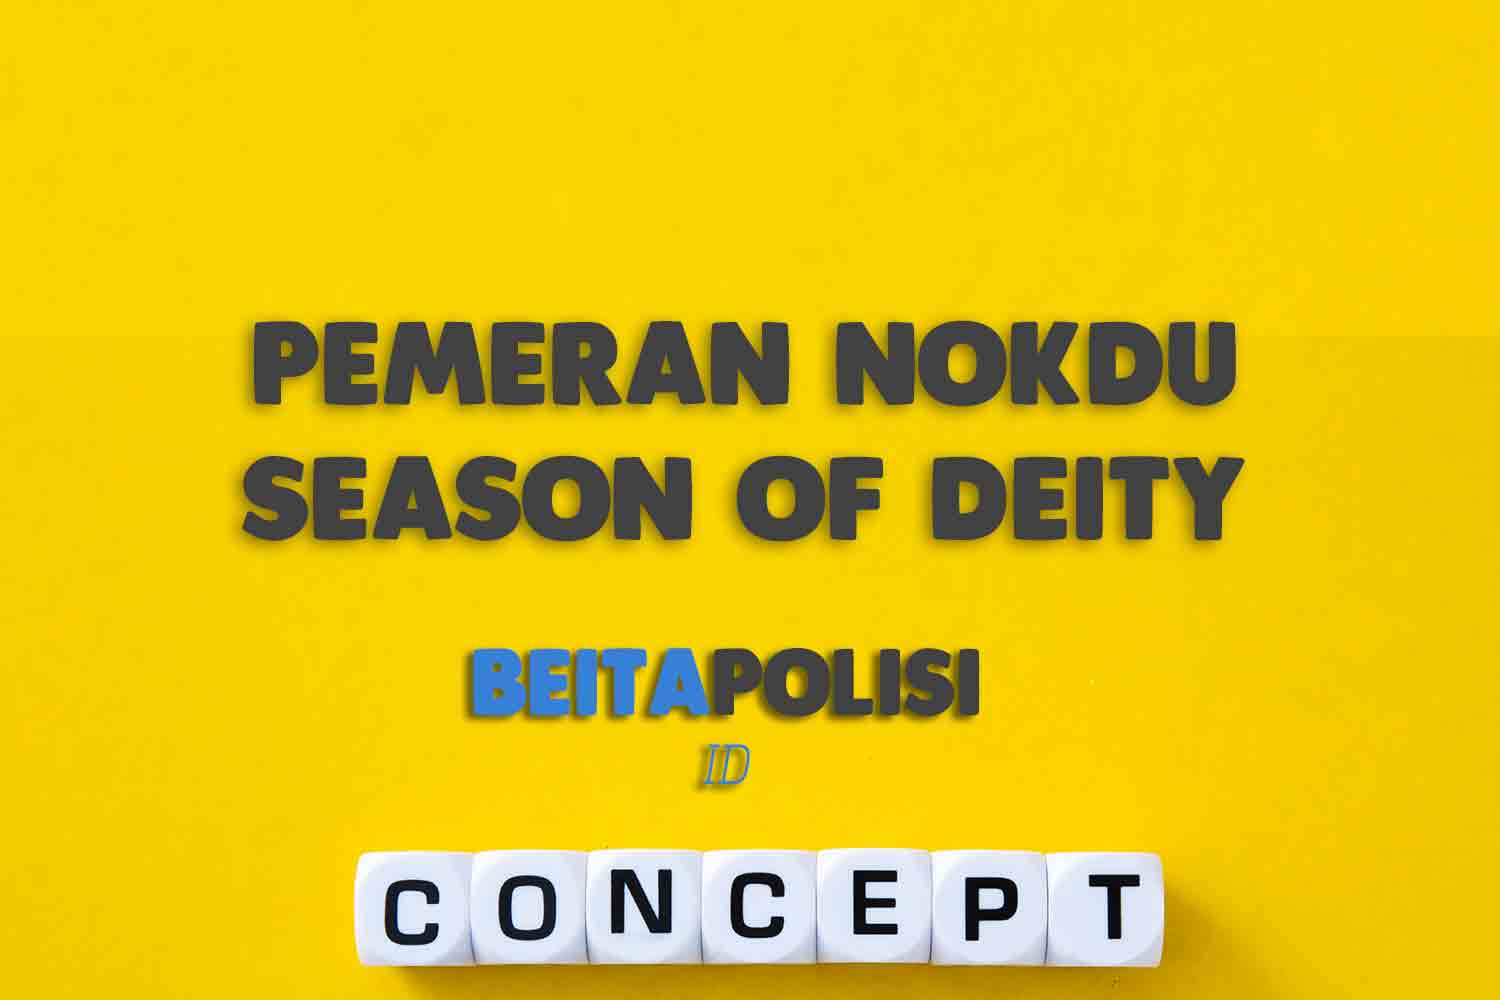 Pemeran Nokdu Season Of Deity